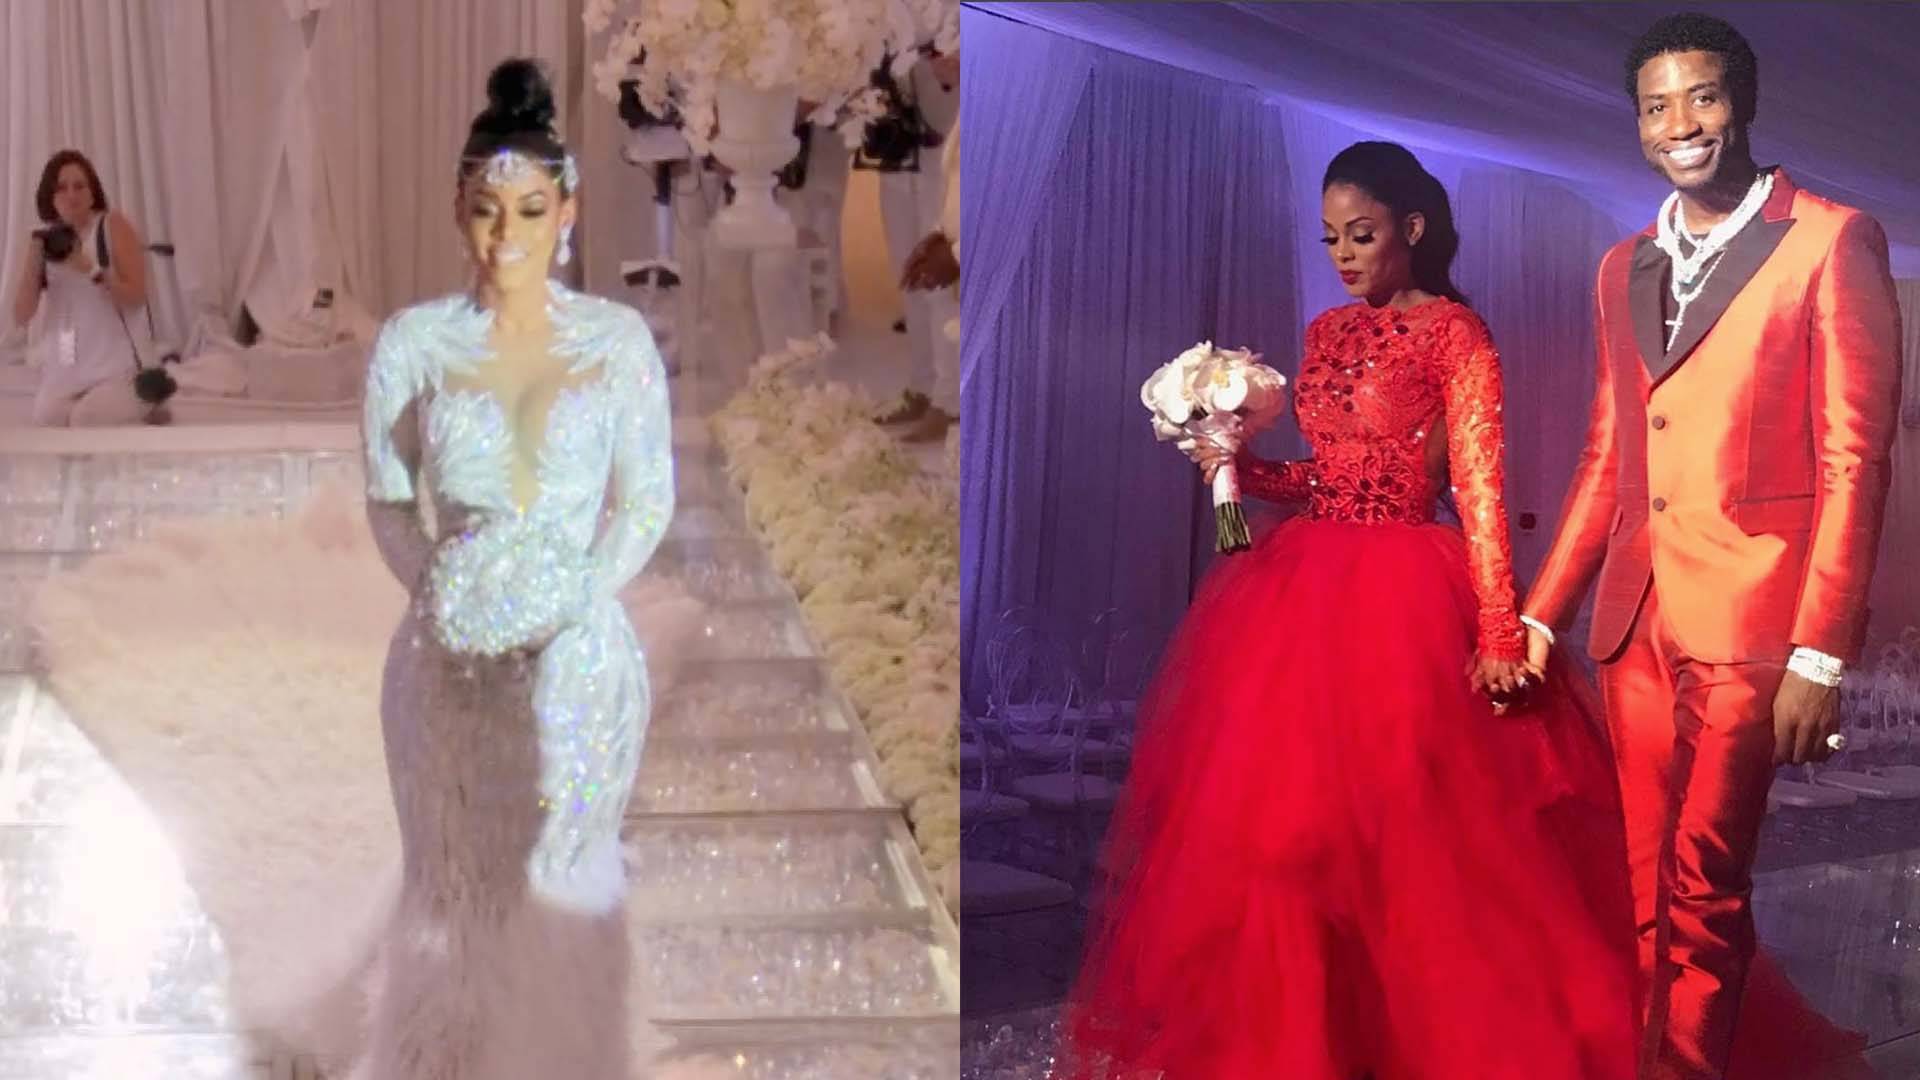 Gucci Mane's Wife Keyshia Ka'oir's Wedding Dress, Bouquet